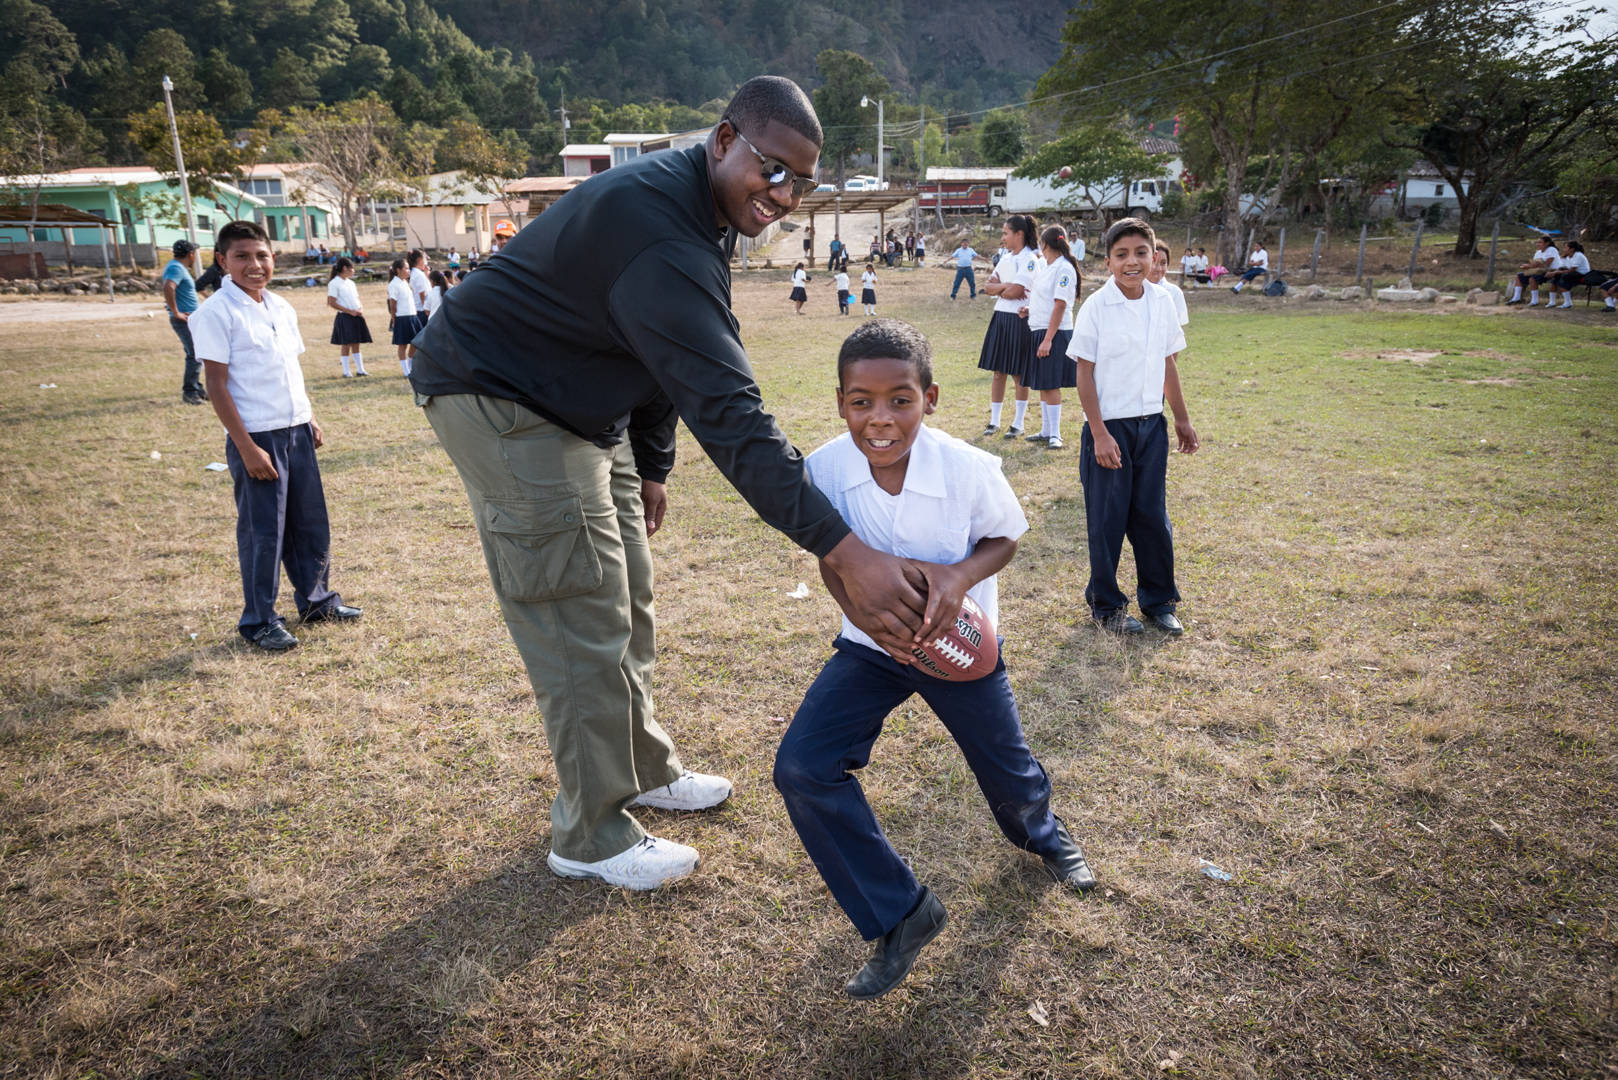 NFL player Kelvin Beachum, Jr. plays American football (Fútbol Americano) with students from World Vision's Agua Blanca project and peer-to-peer tutoring program in San Juan, Honduras.